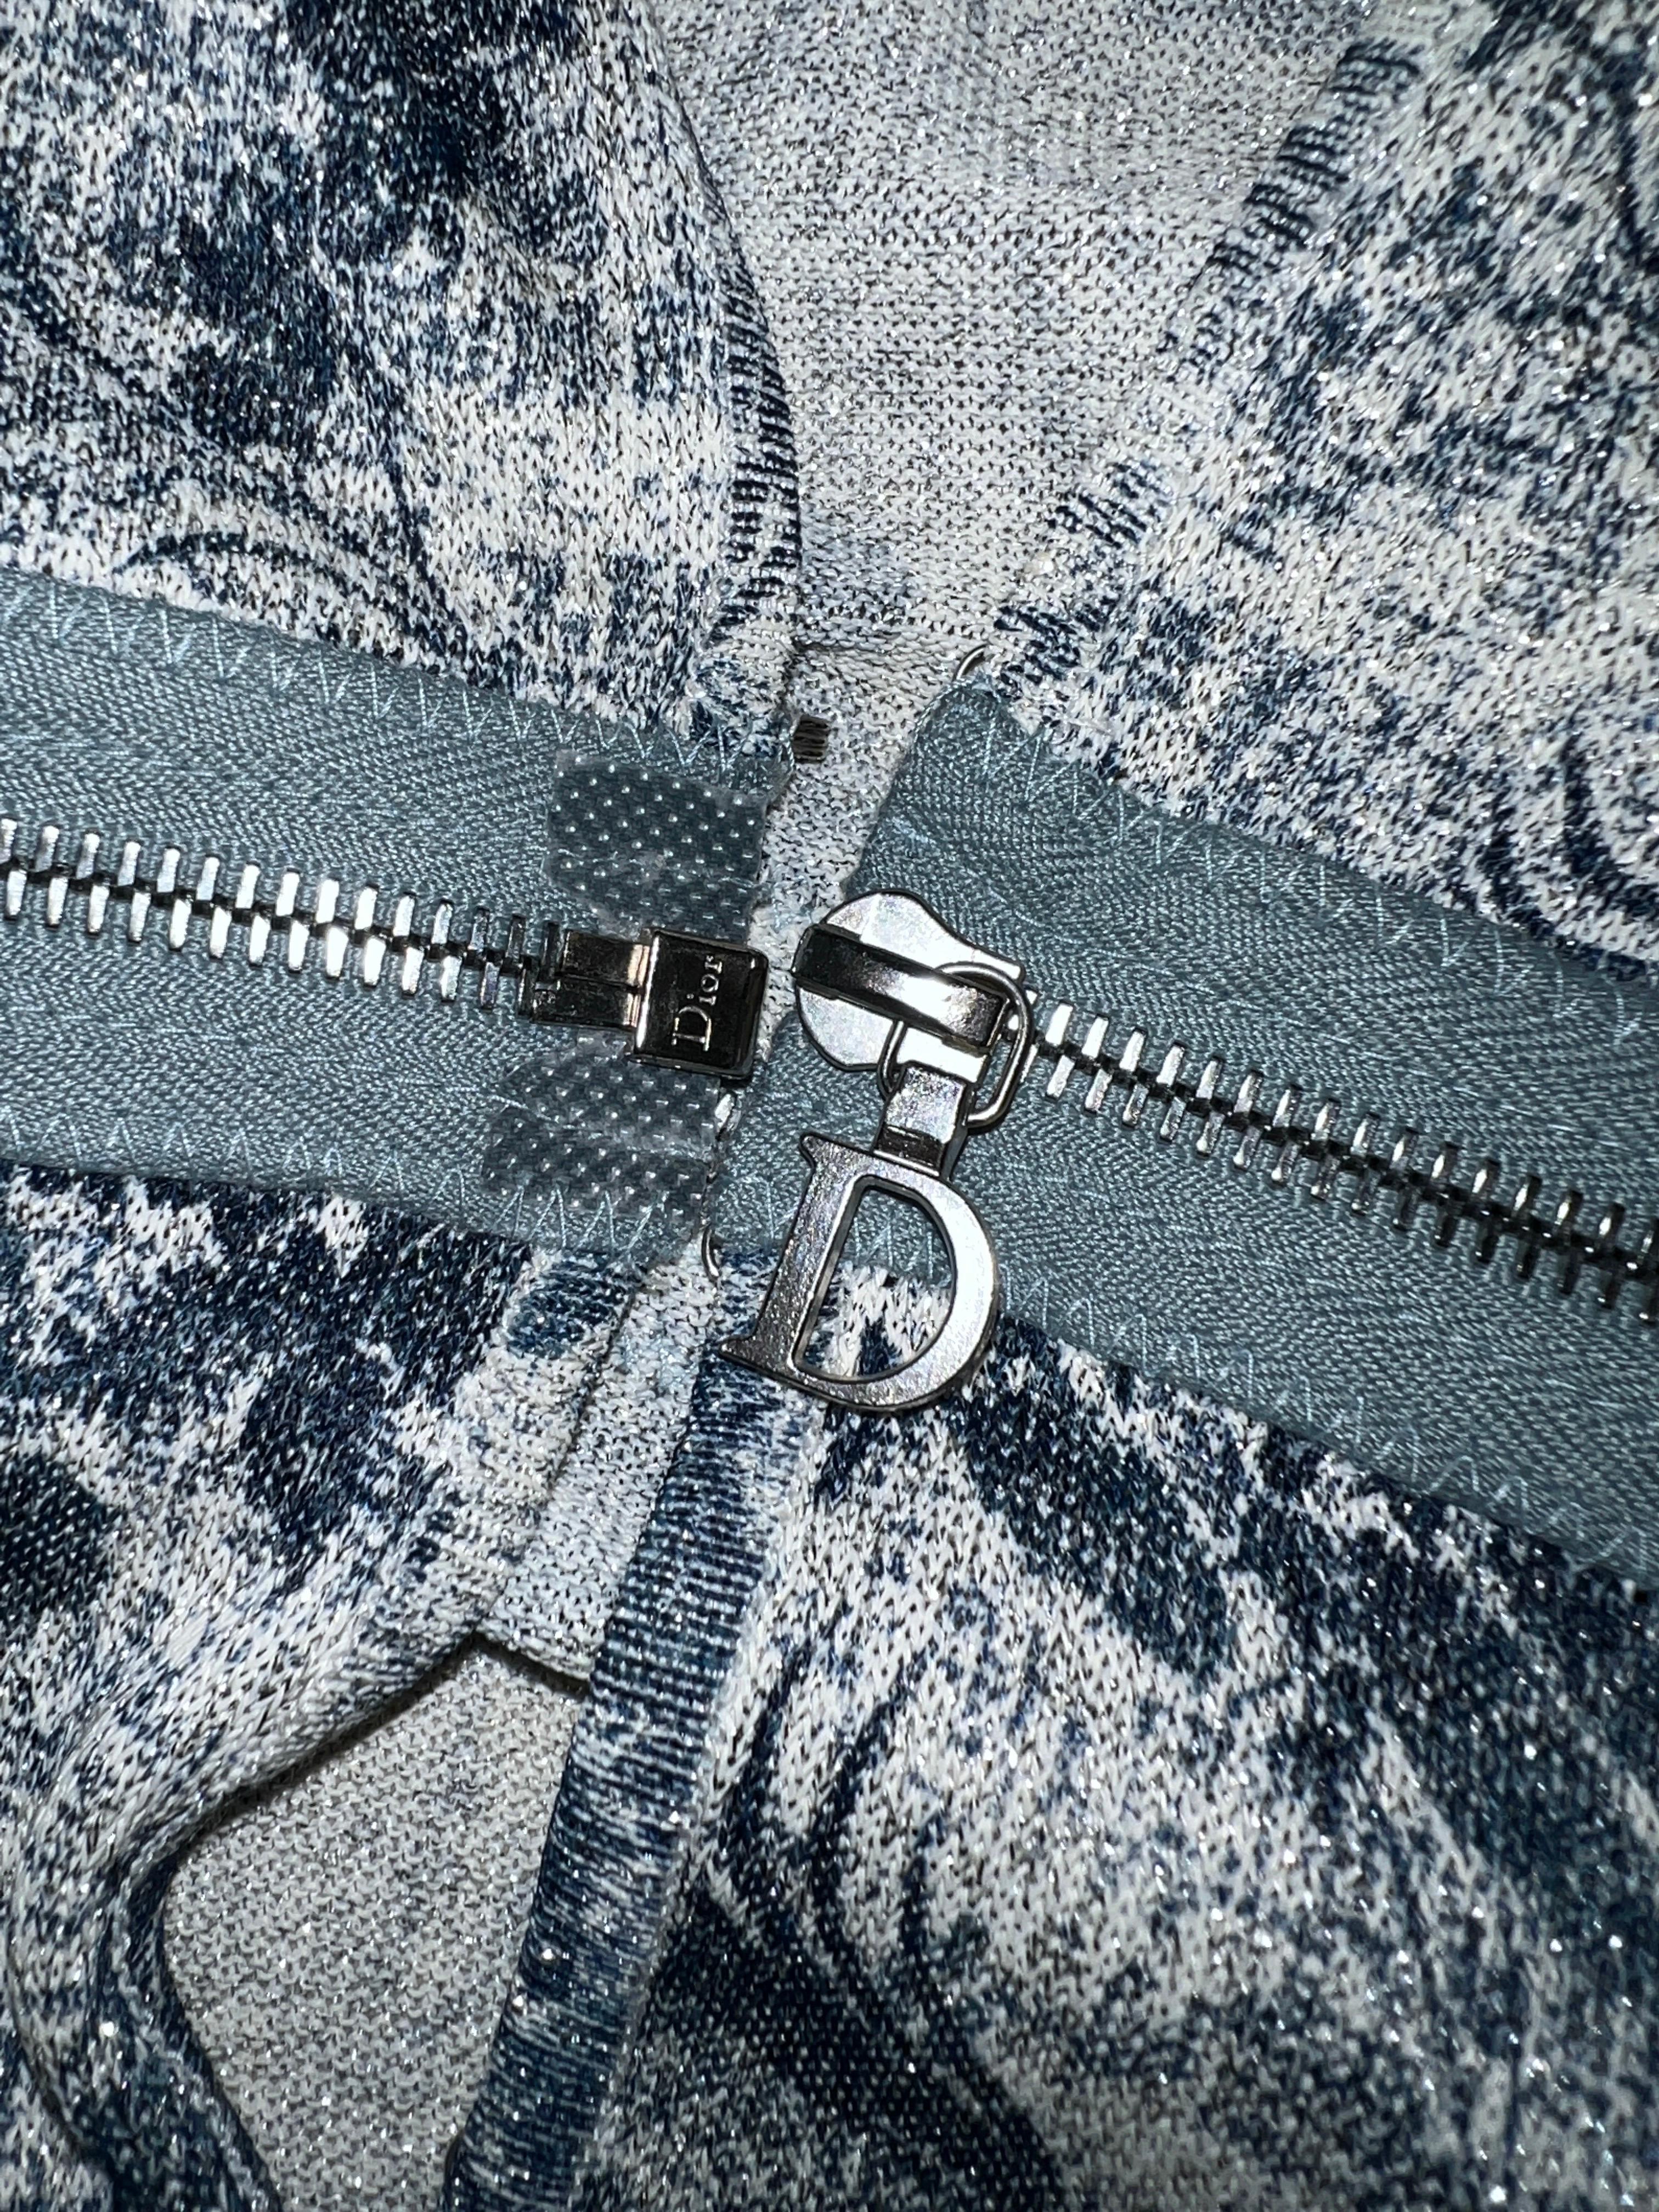 Women's CHRISTIAN DIOR by John Galliano 2001 Metallic Knit Twin Set Zipper Details 36 For Sale